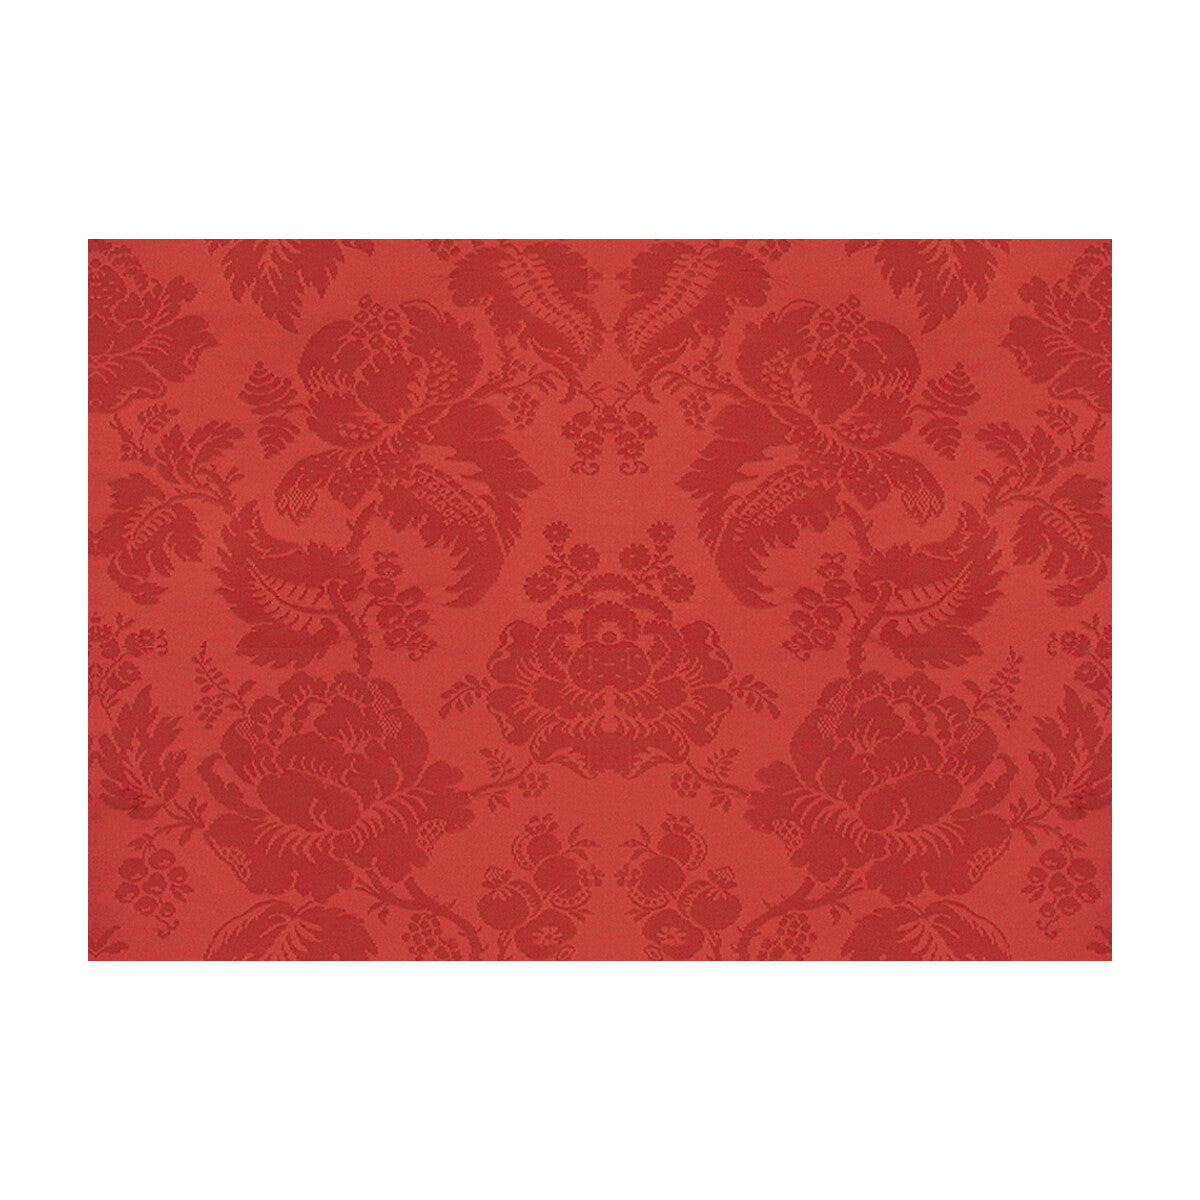 Moulins Damask fabric in vieux rouge color - pattern BR-81035.C.0 - by Brunschwig &amp; Fils